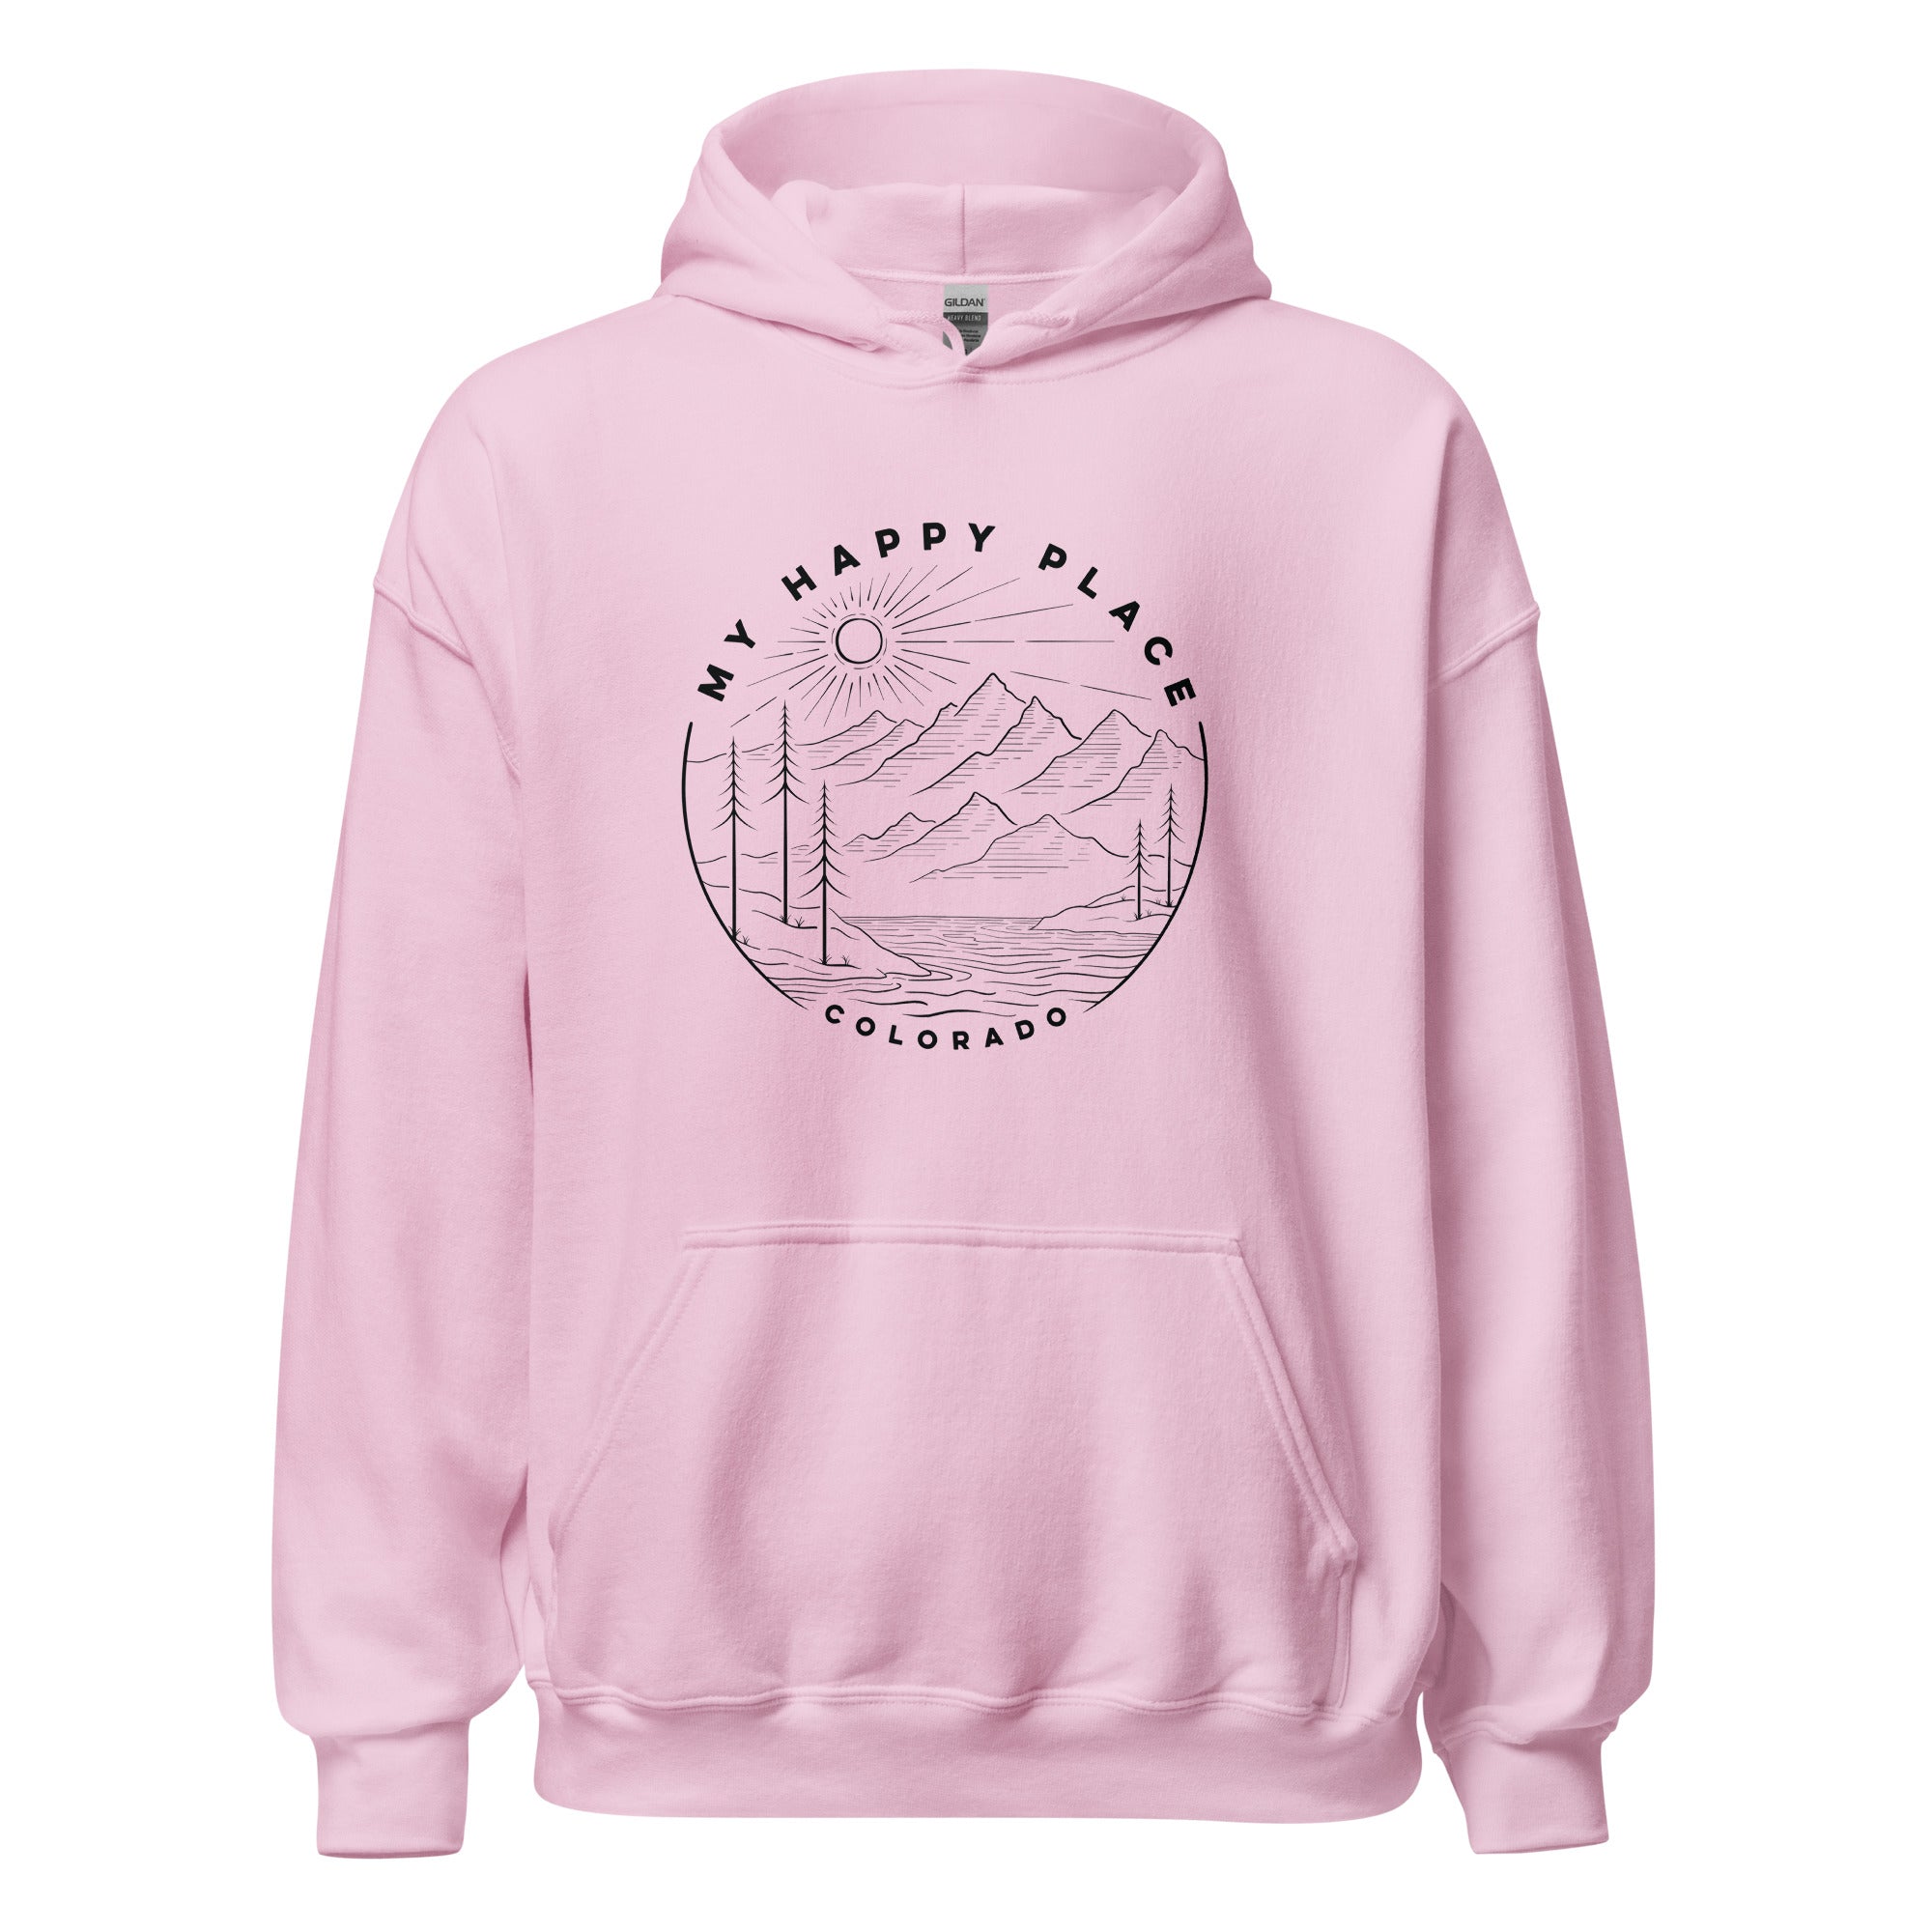 unisex-heavy-blend-hoodie-light-pink-front-654be8b2ce9e2.jpg